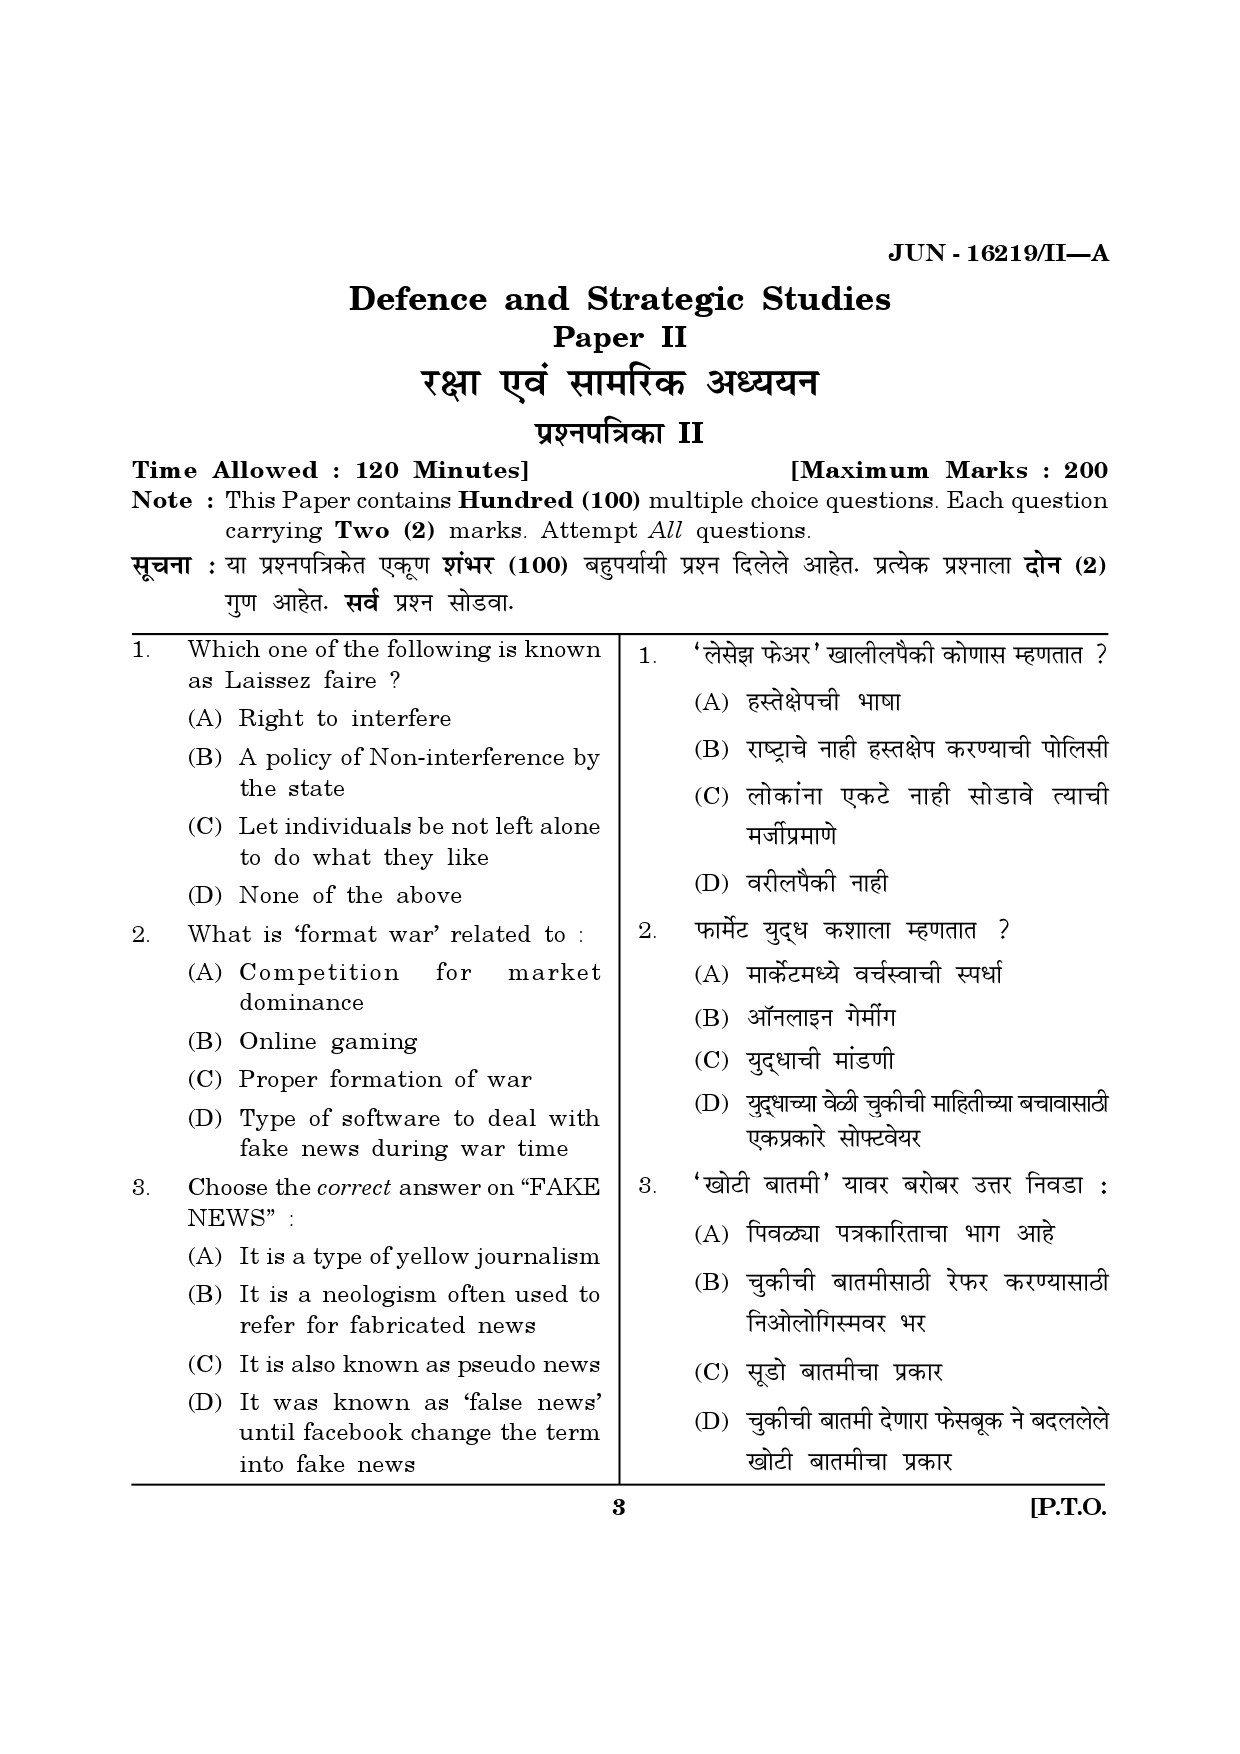 Maharashtra SET Defence and Strategic Studies Question Paper II June 2019 2